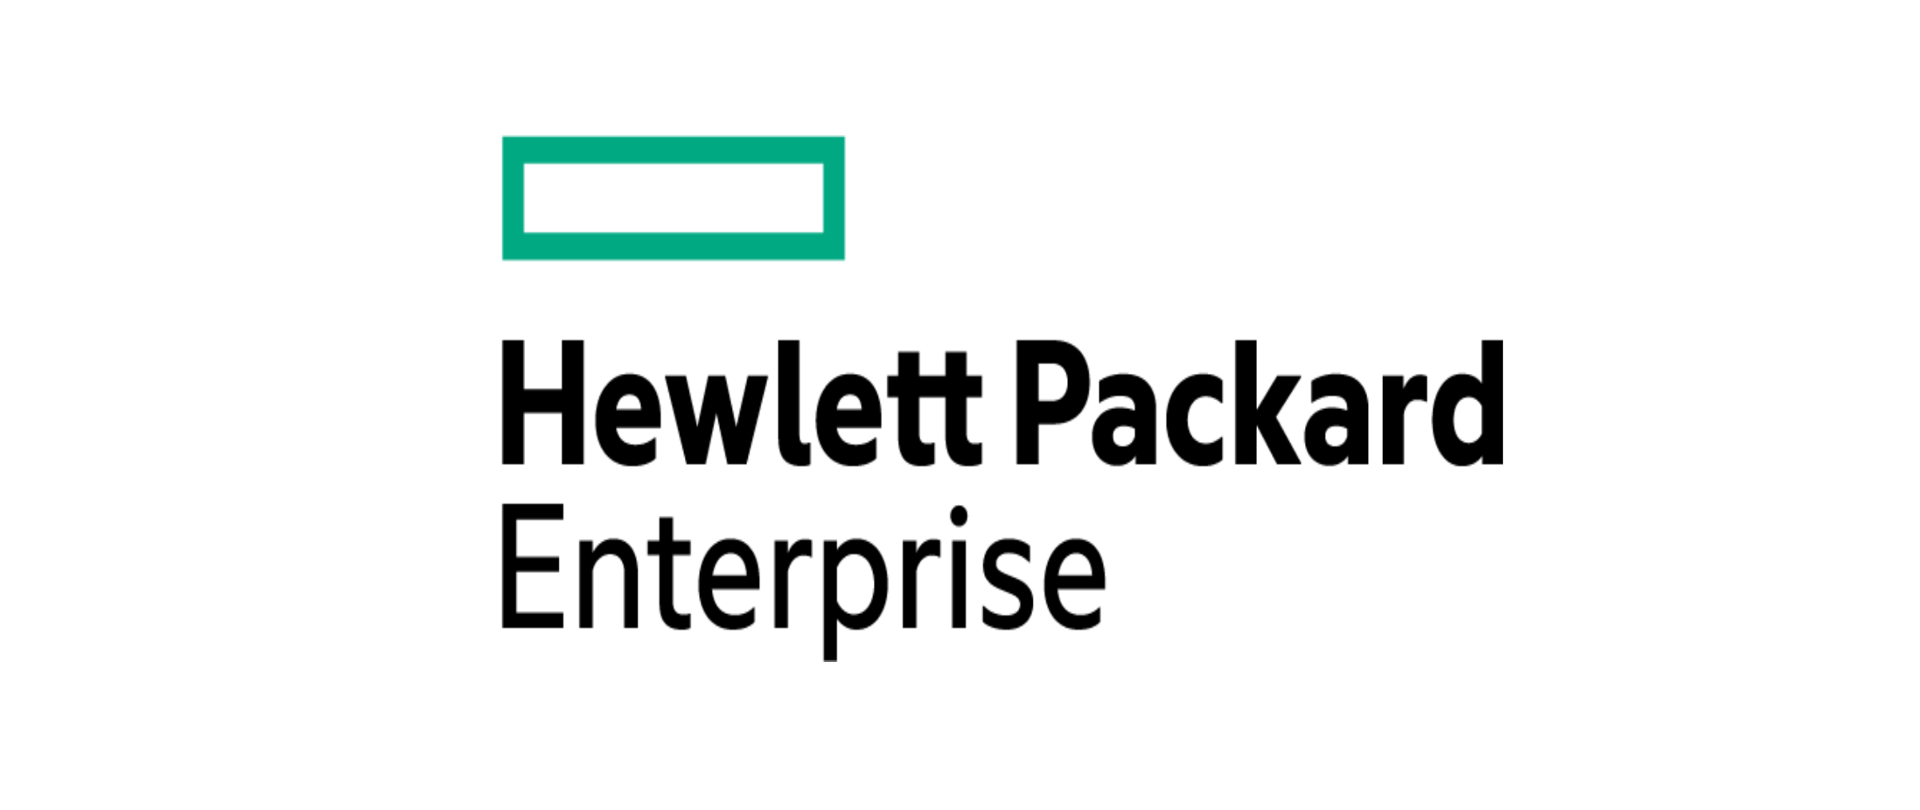 Hewlett Packard Enterprise w Programie PWCyber